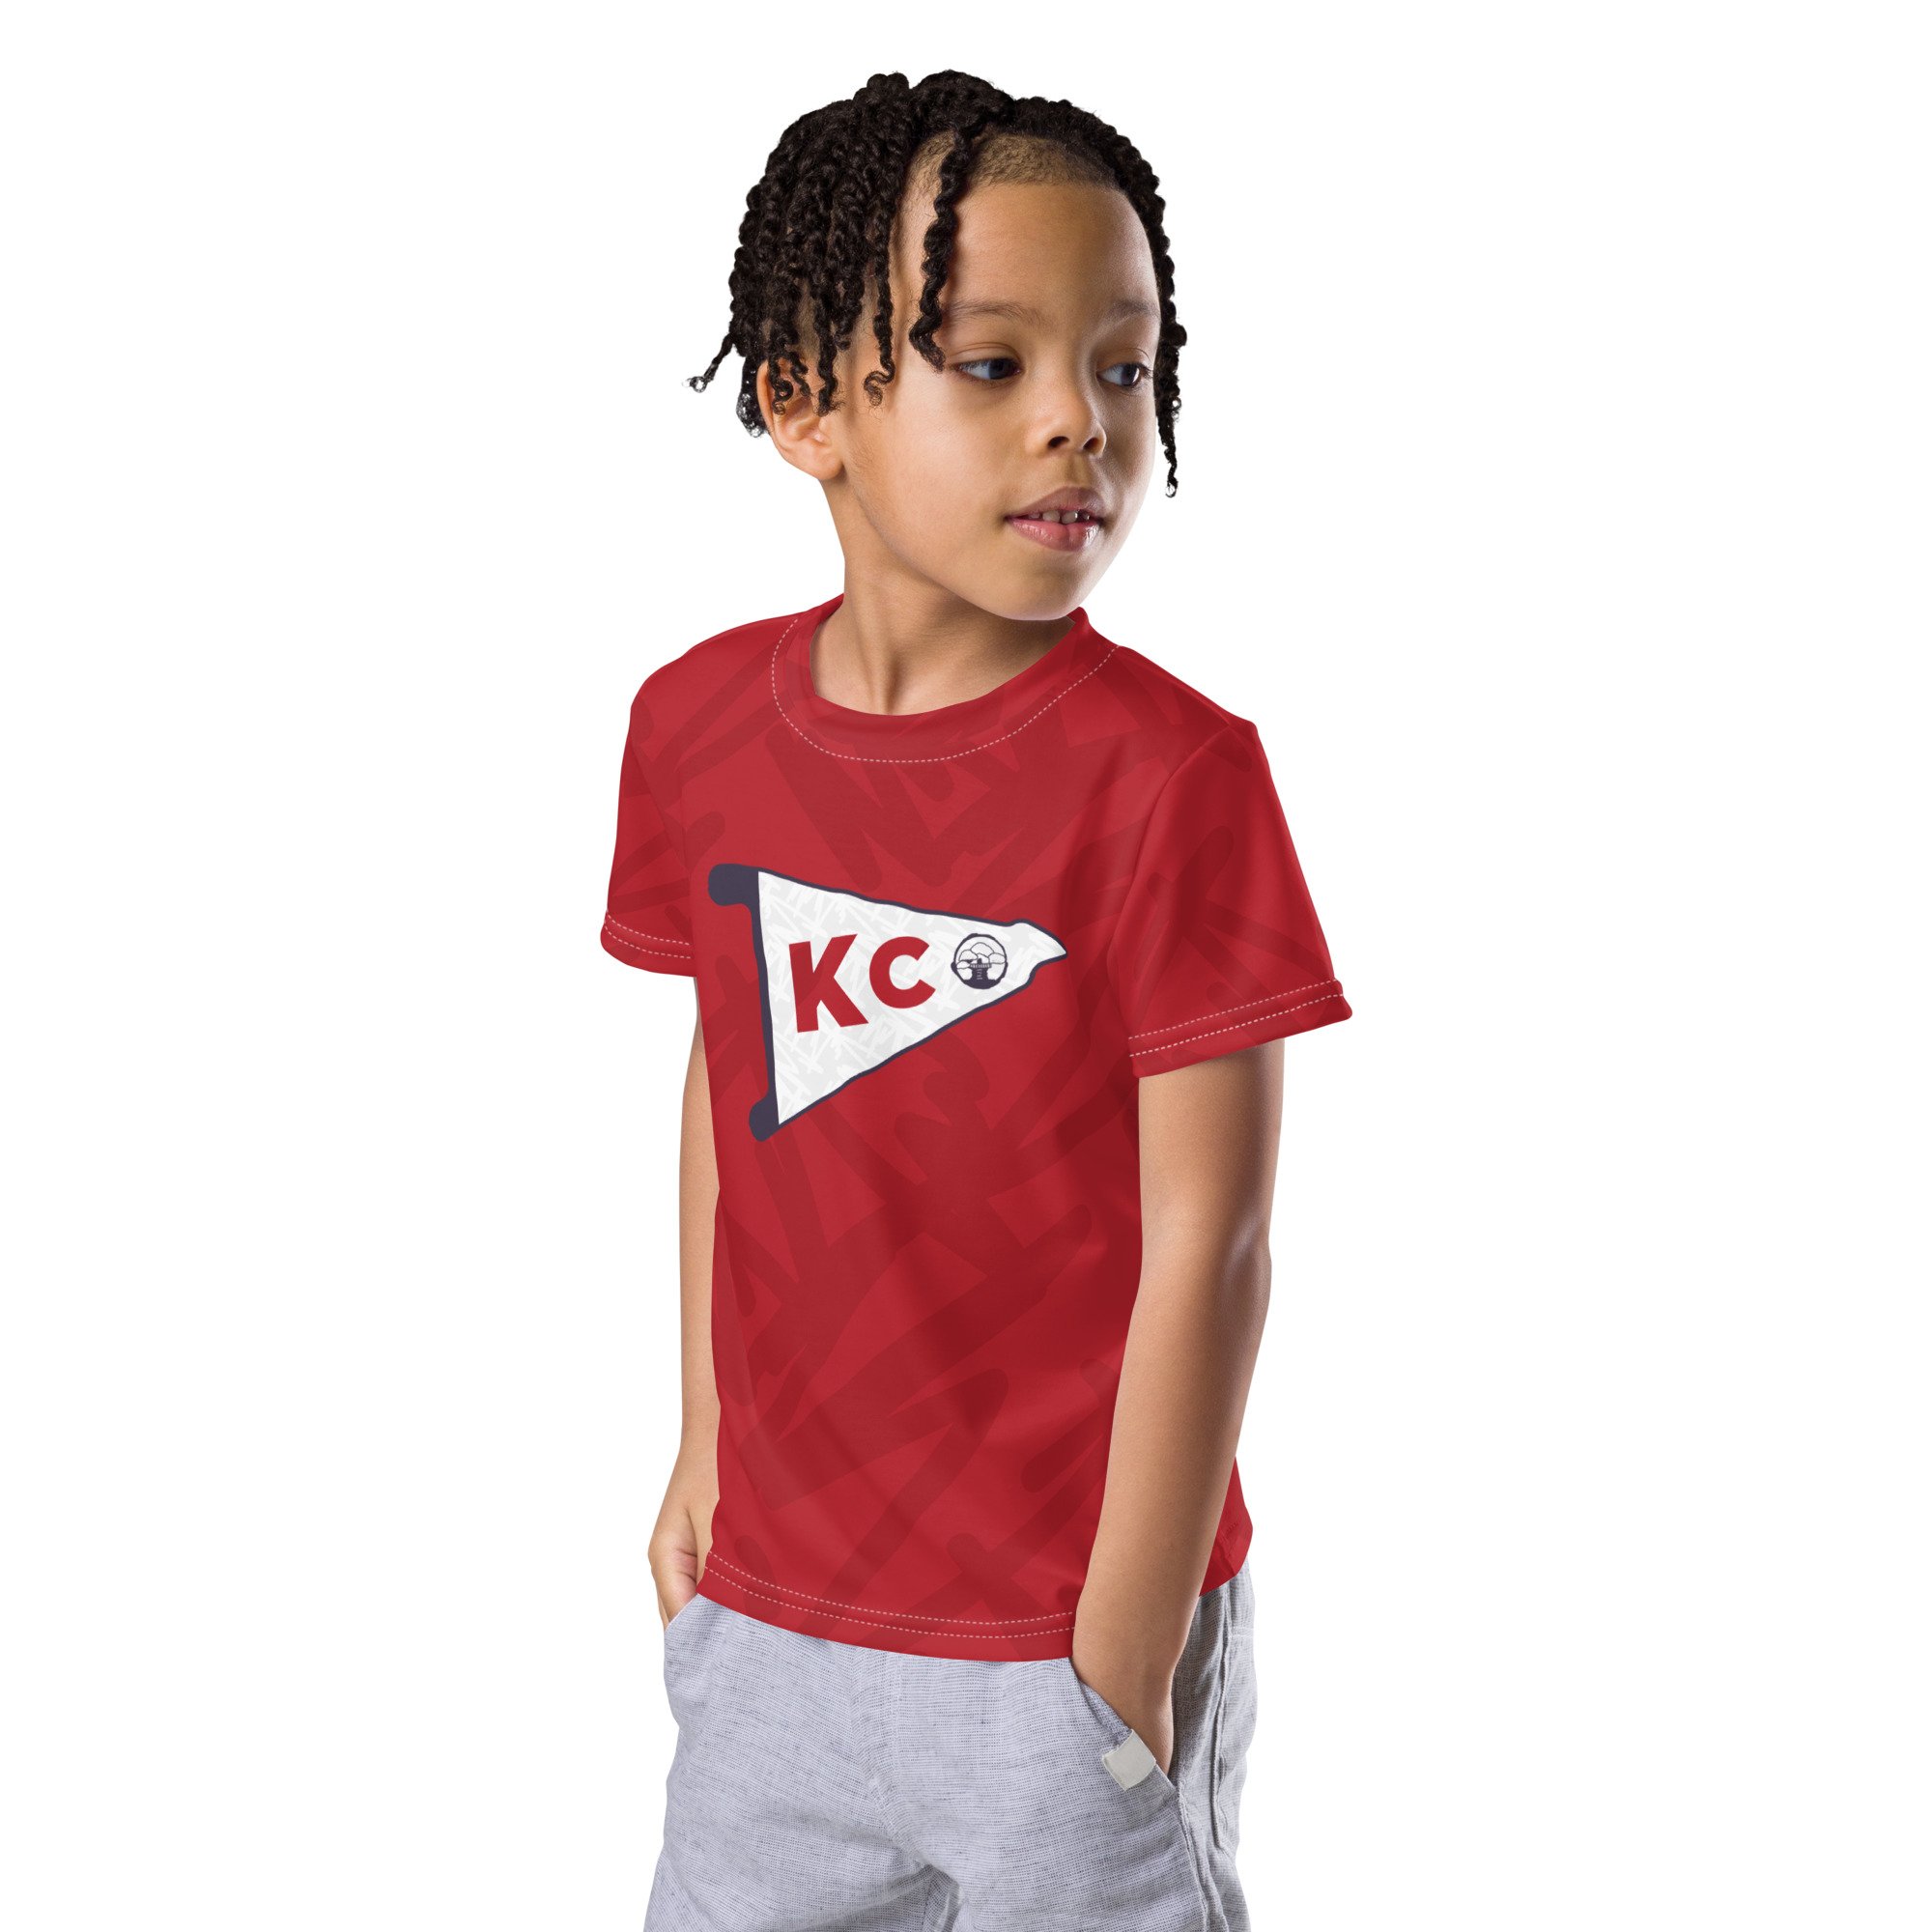 Children\'s Center KC — Red / Treehouse t-shirt CTLC Friday kids Learning neck crew